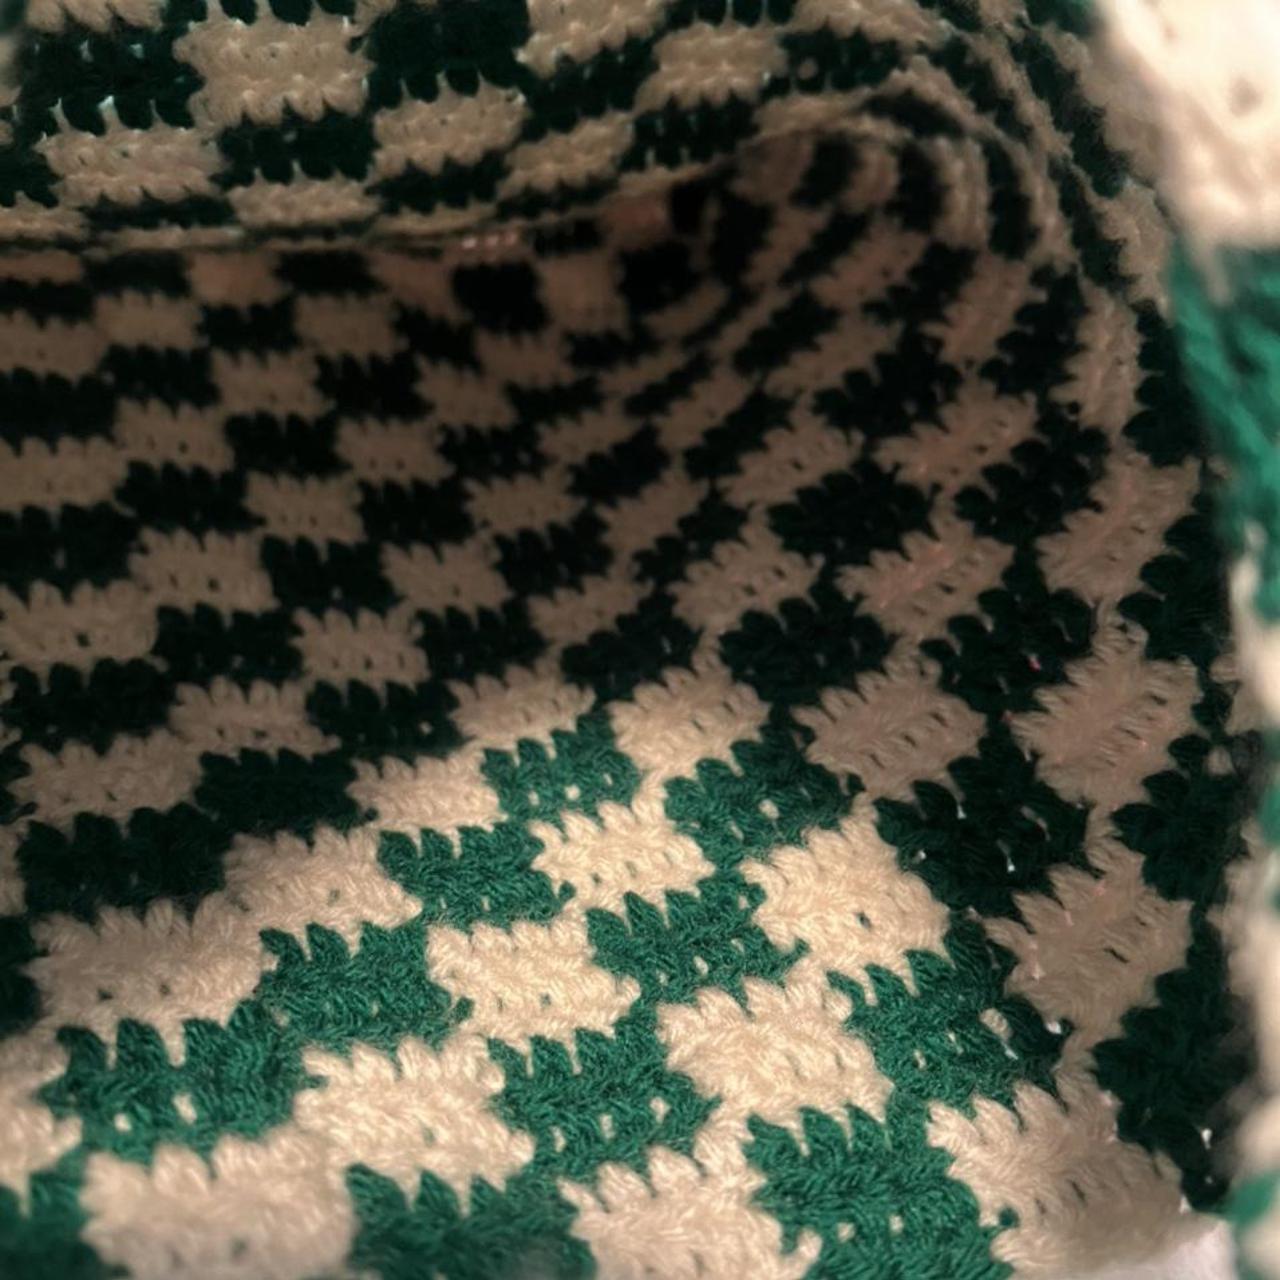 Crochet Duck Bag DM for custom colors (yellow, - Depop